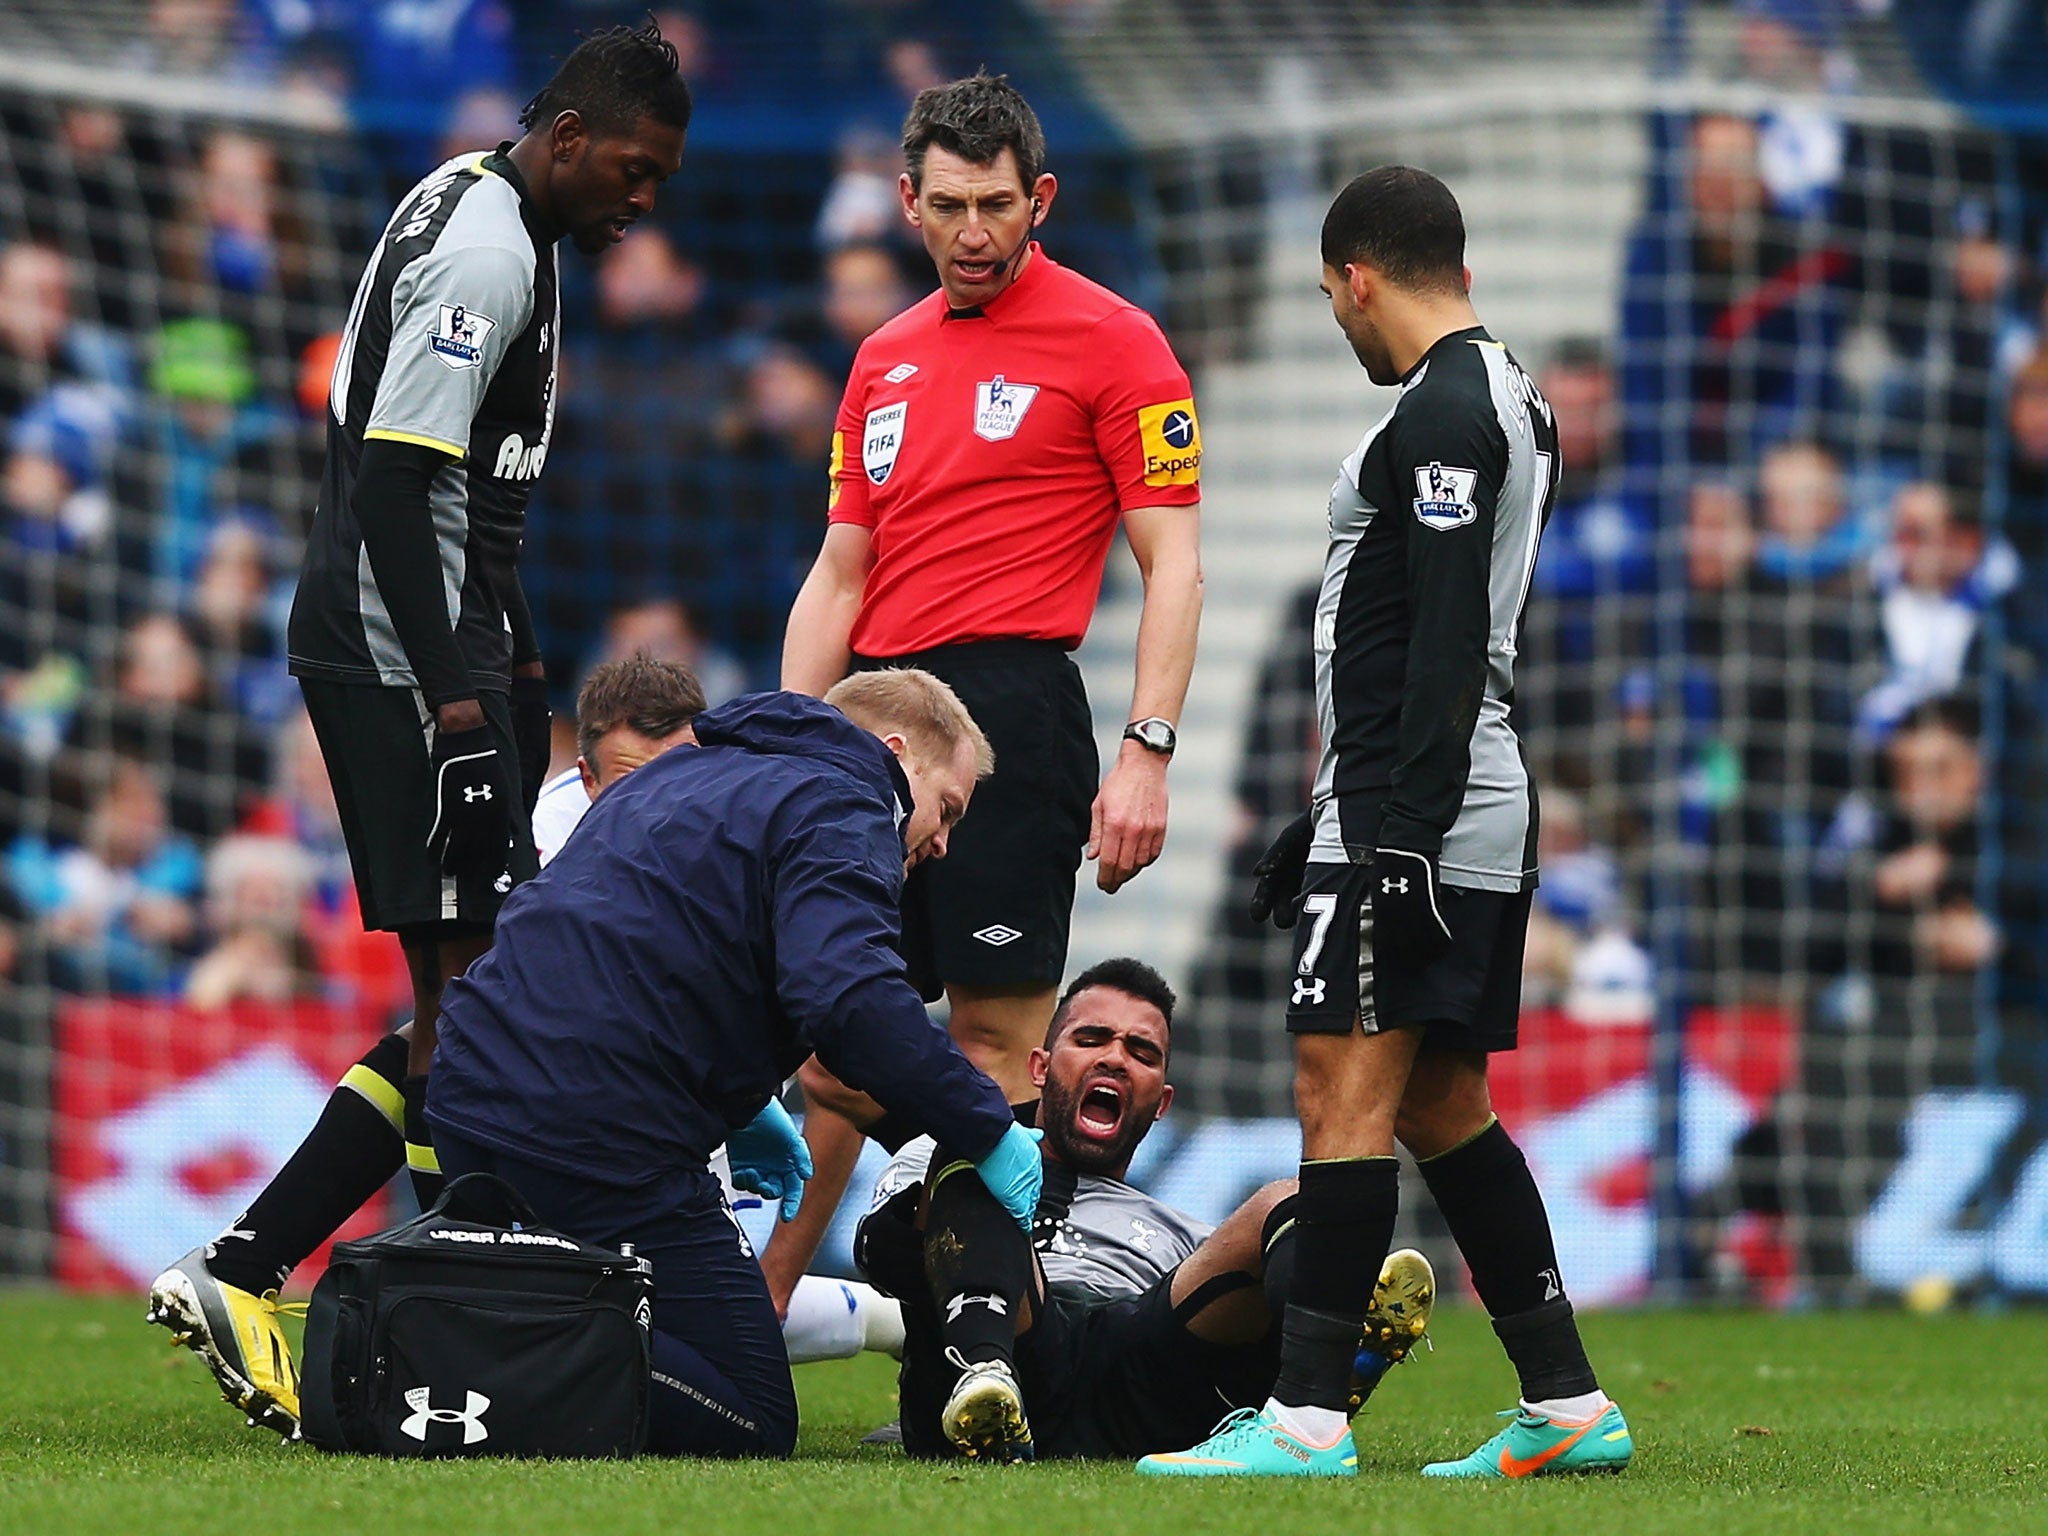 Spurs’ midfielder Sandro was injured against QPR last weekend